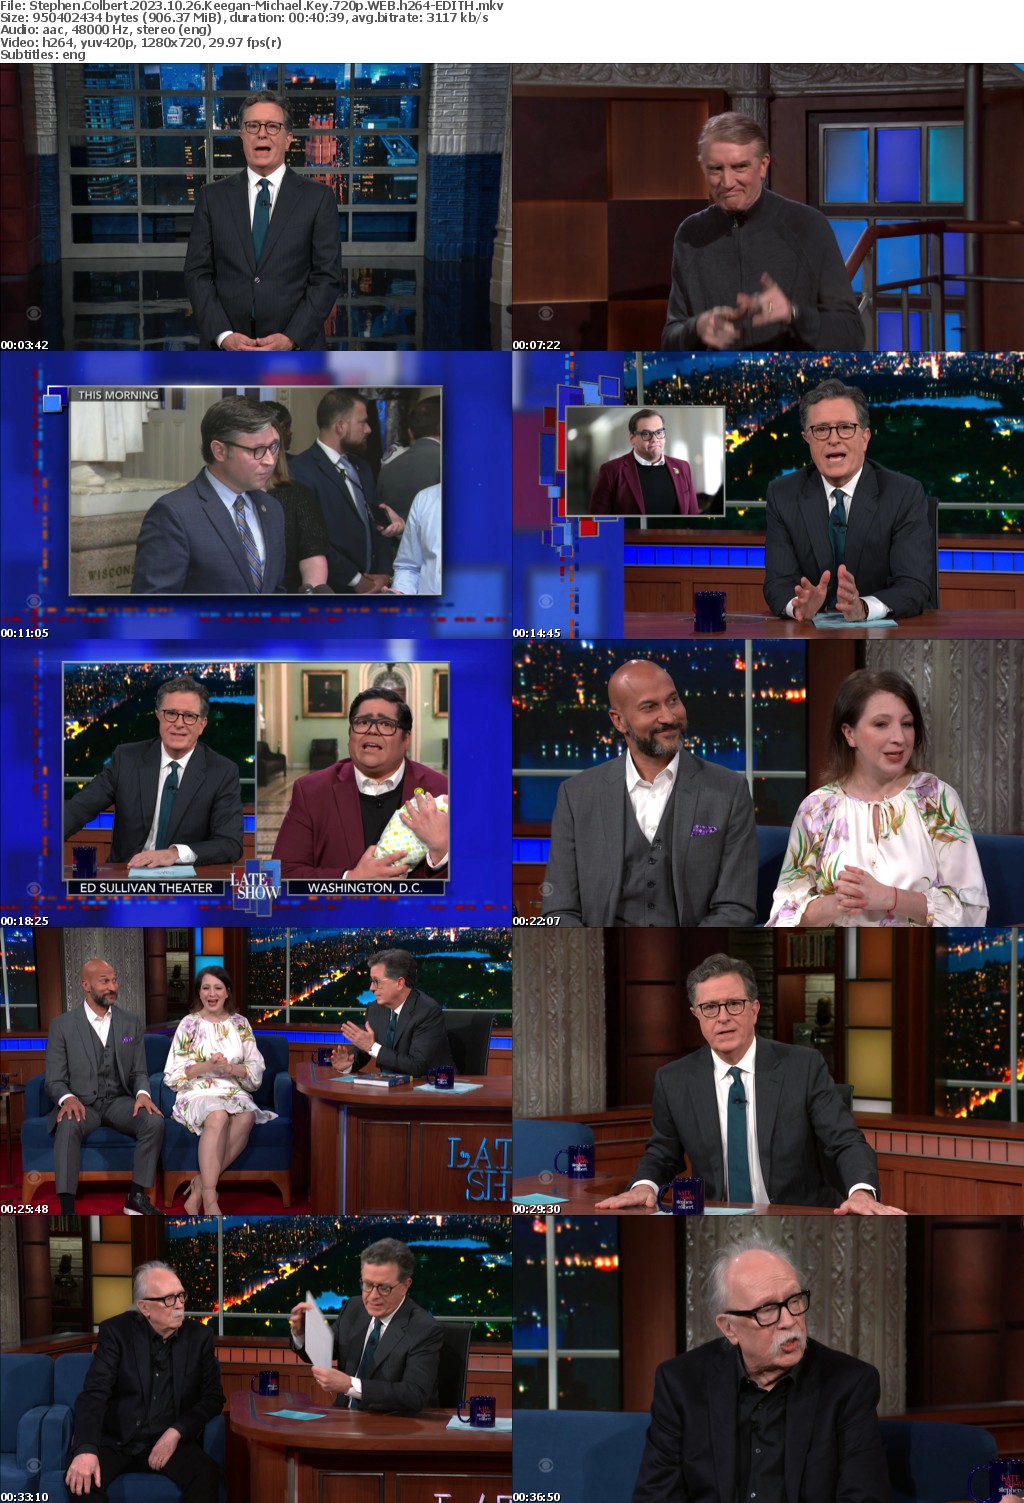 Stephen Colbert 2023 10 26 Keegan-Michael Key 720p WEB h264-EDITH